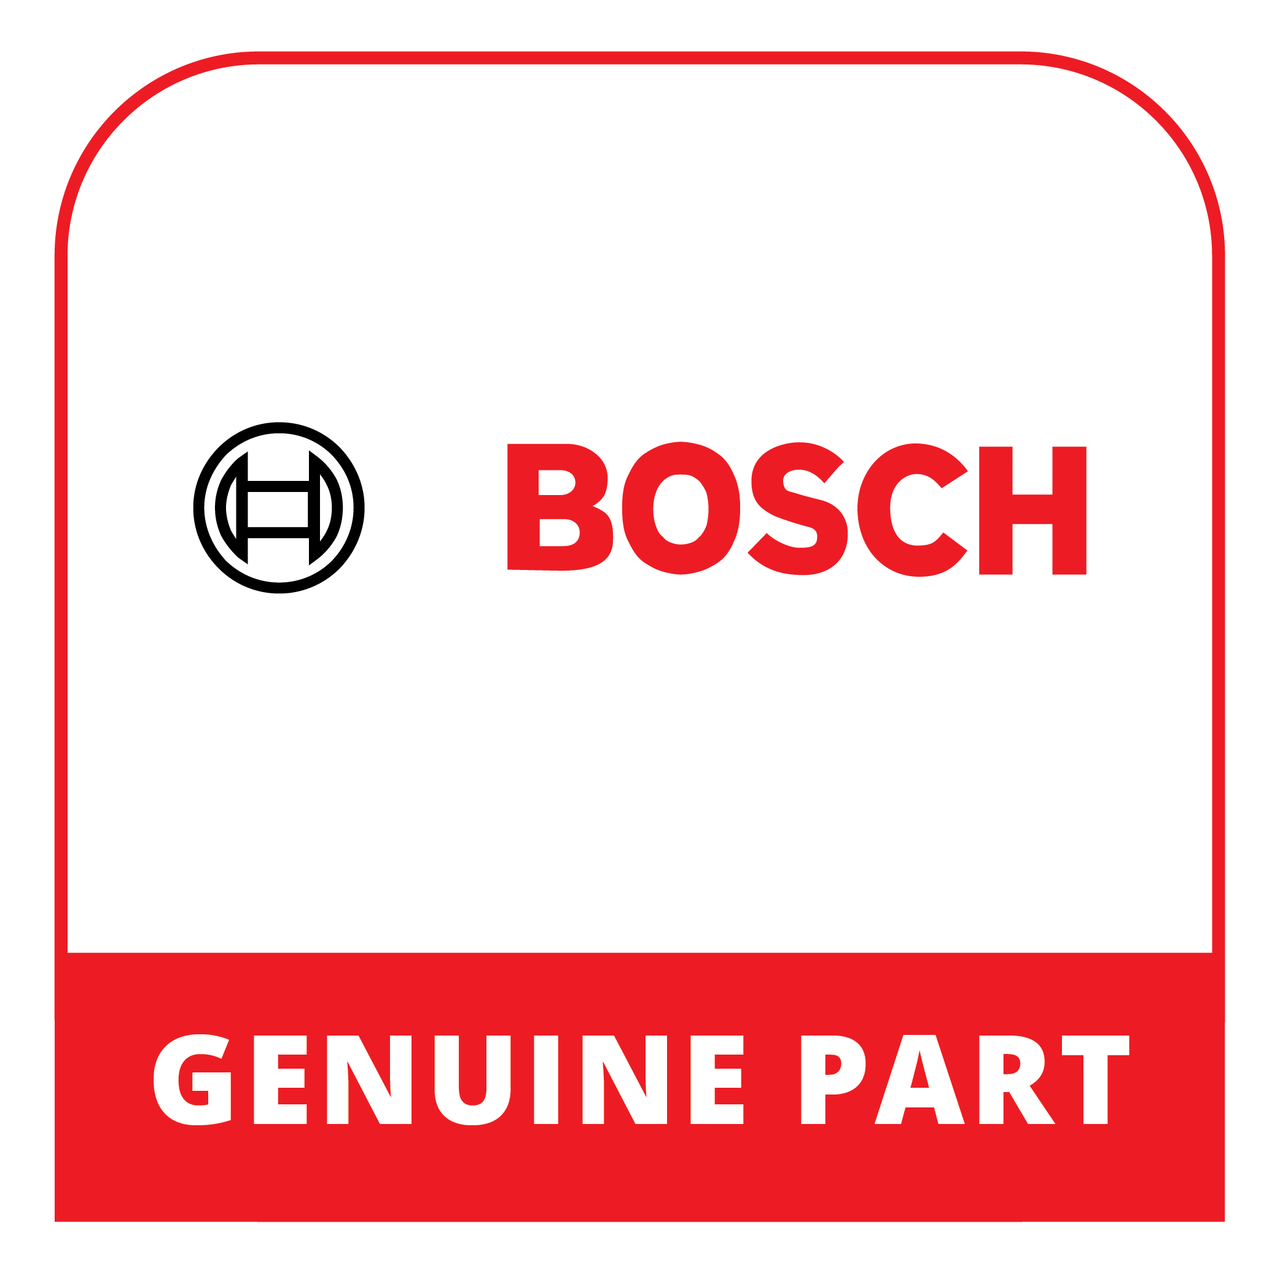 Bosch (Thermador) 12025742 - Burner Cap - Genuine Bosch (Thermador) Part